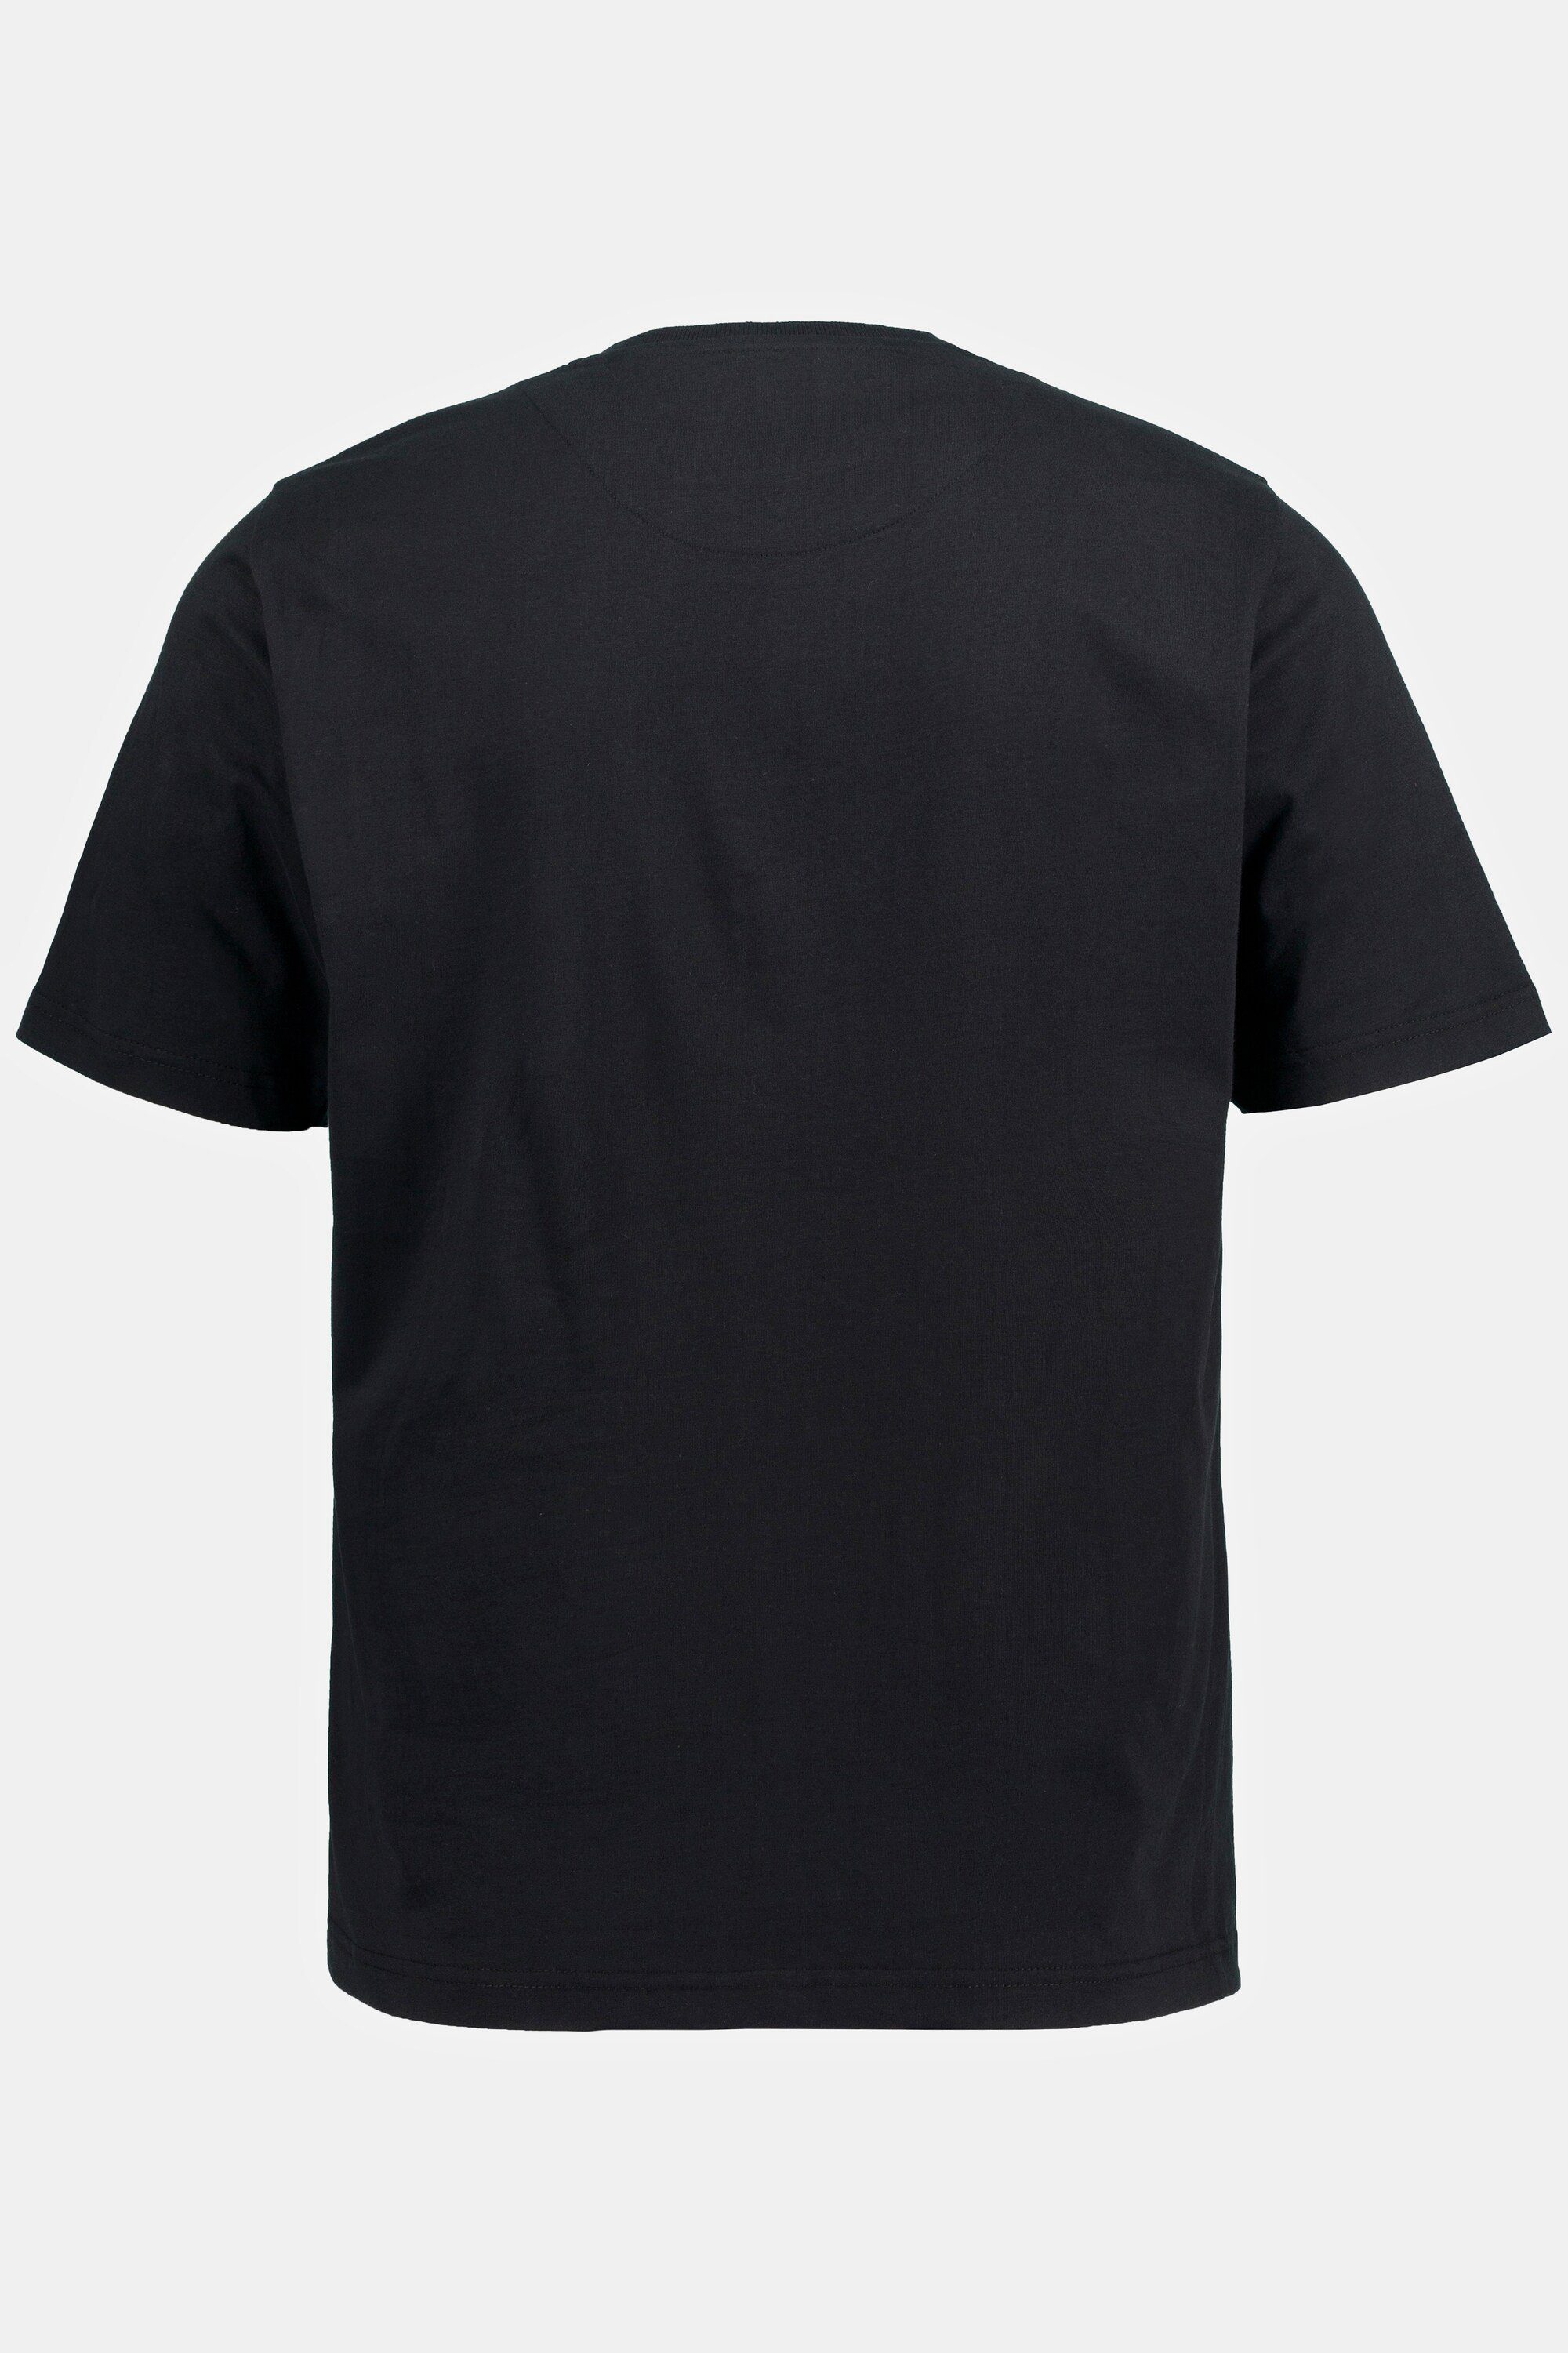 XL Biker Motorrad Halbarm JP1880 bis 8 Print T-Shirt T-Shirt